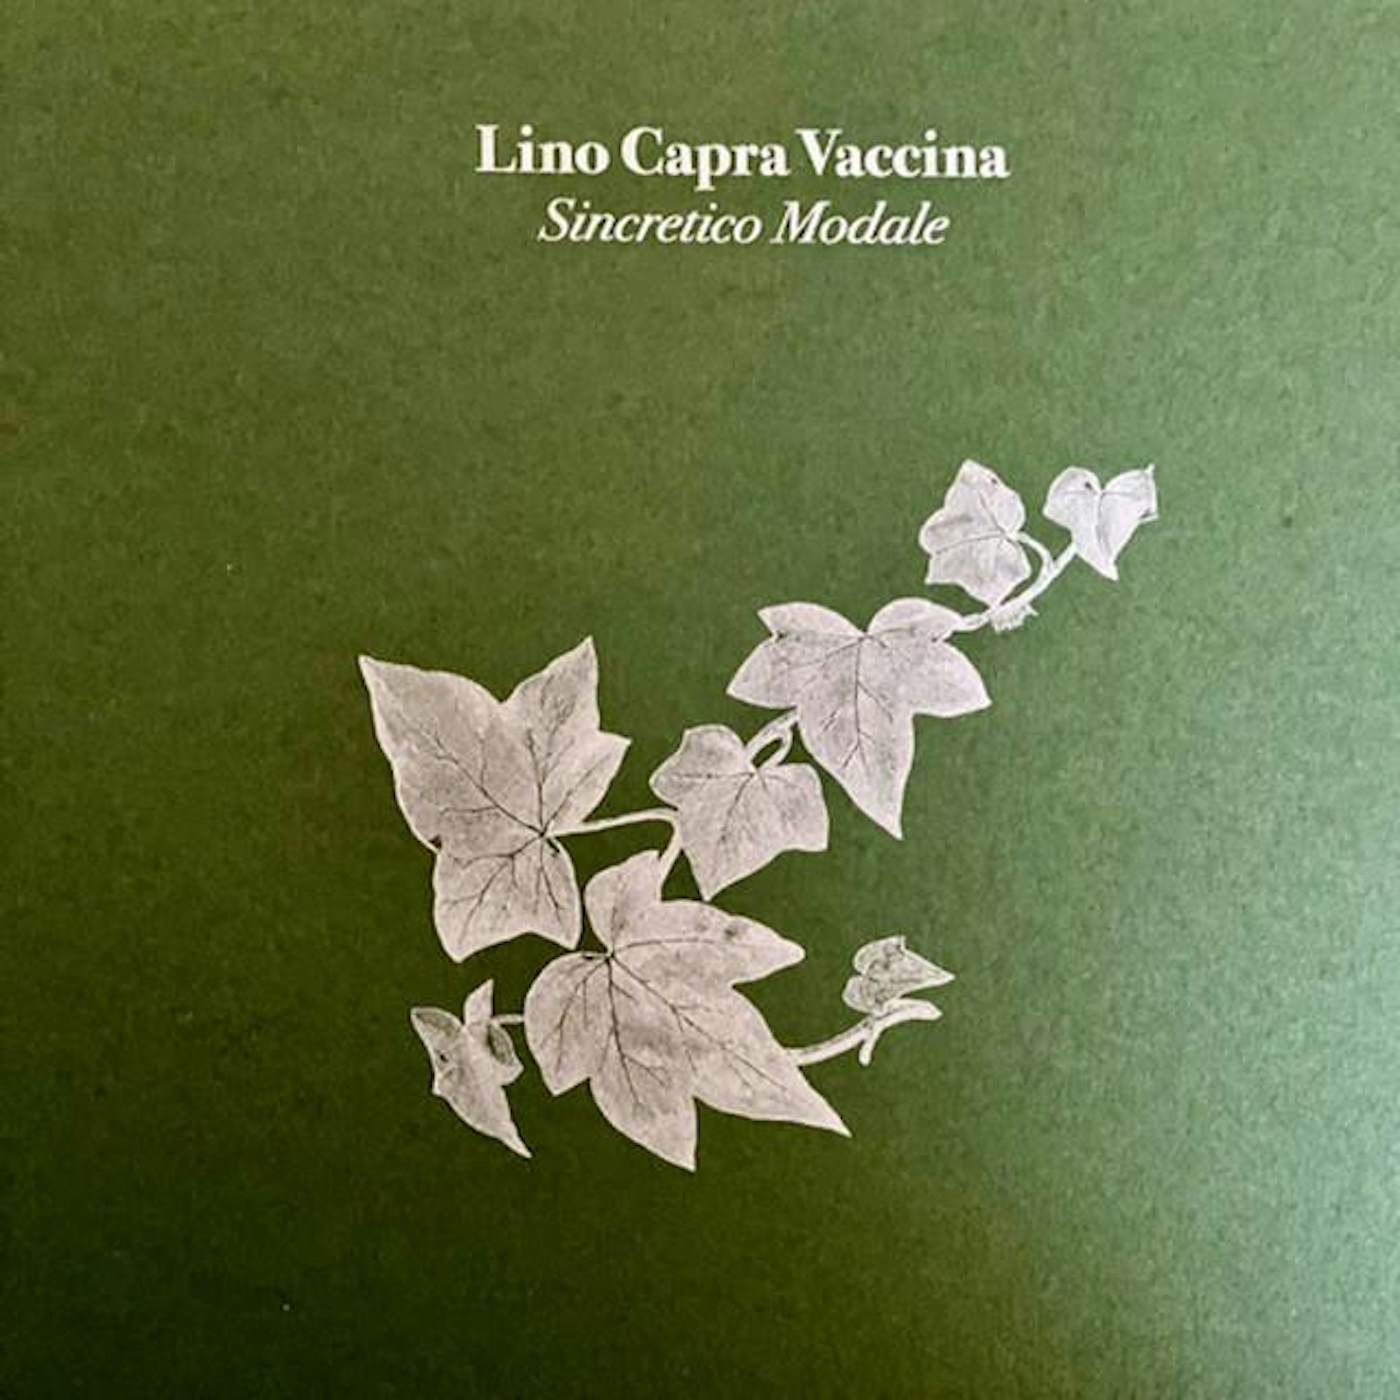 Lino Capra Vaccina